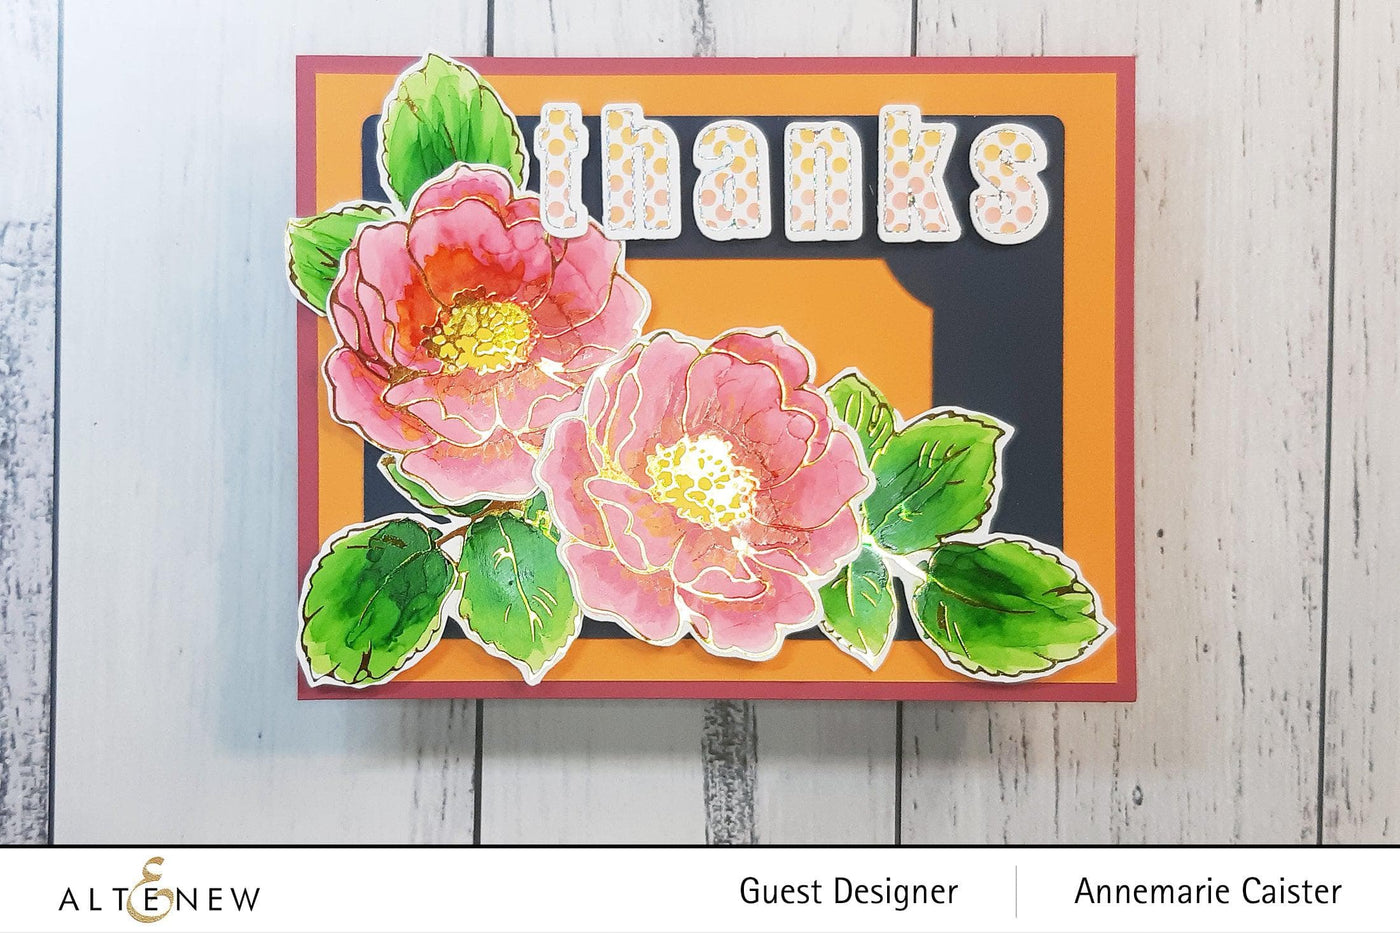 Altenew Stamp & Die & Hot Foil Plate Bundle Build-A-Flower: Wild Rose Complete Bundle